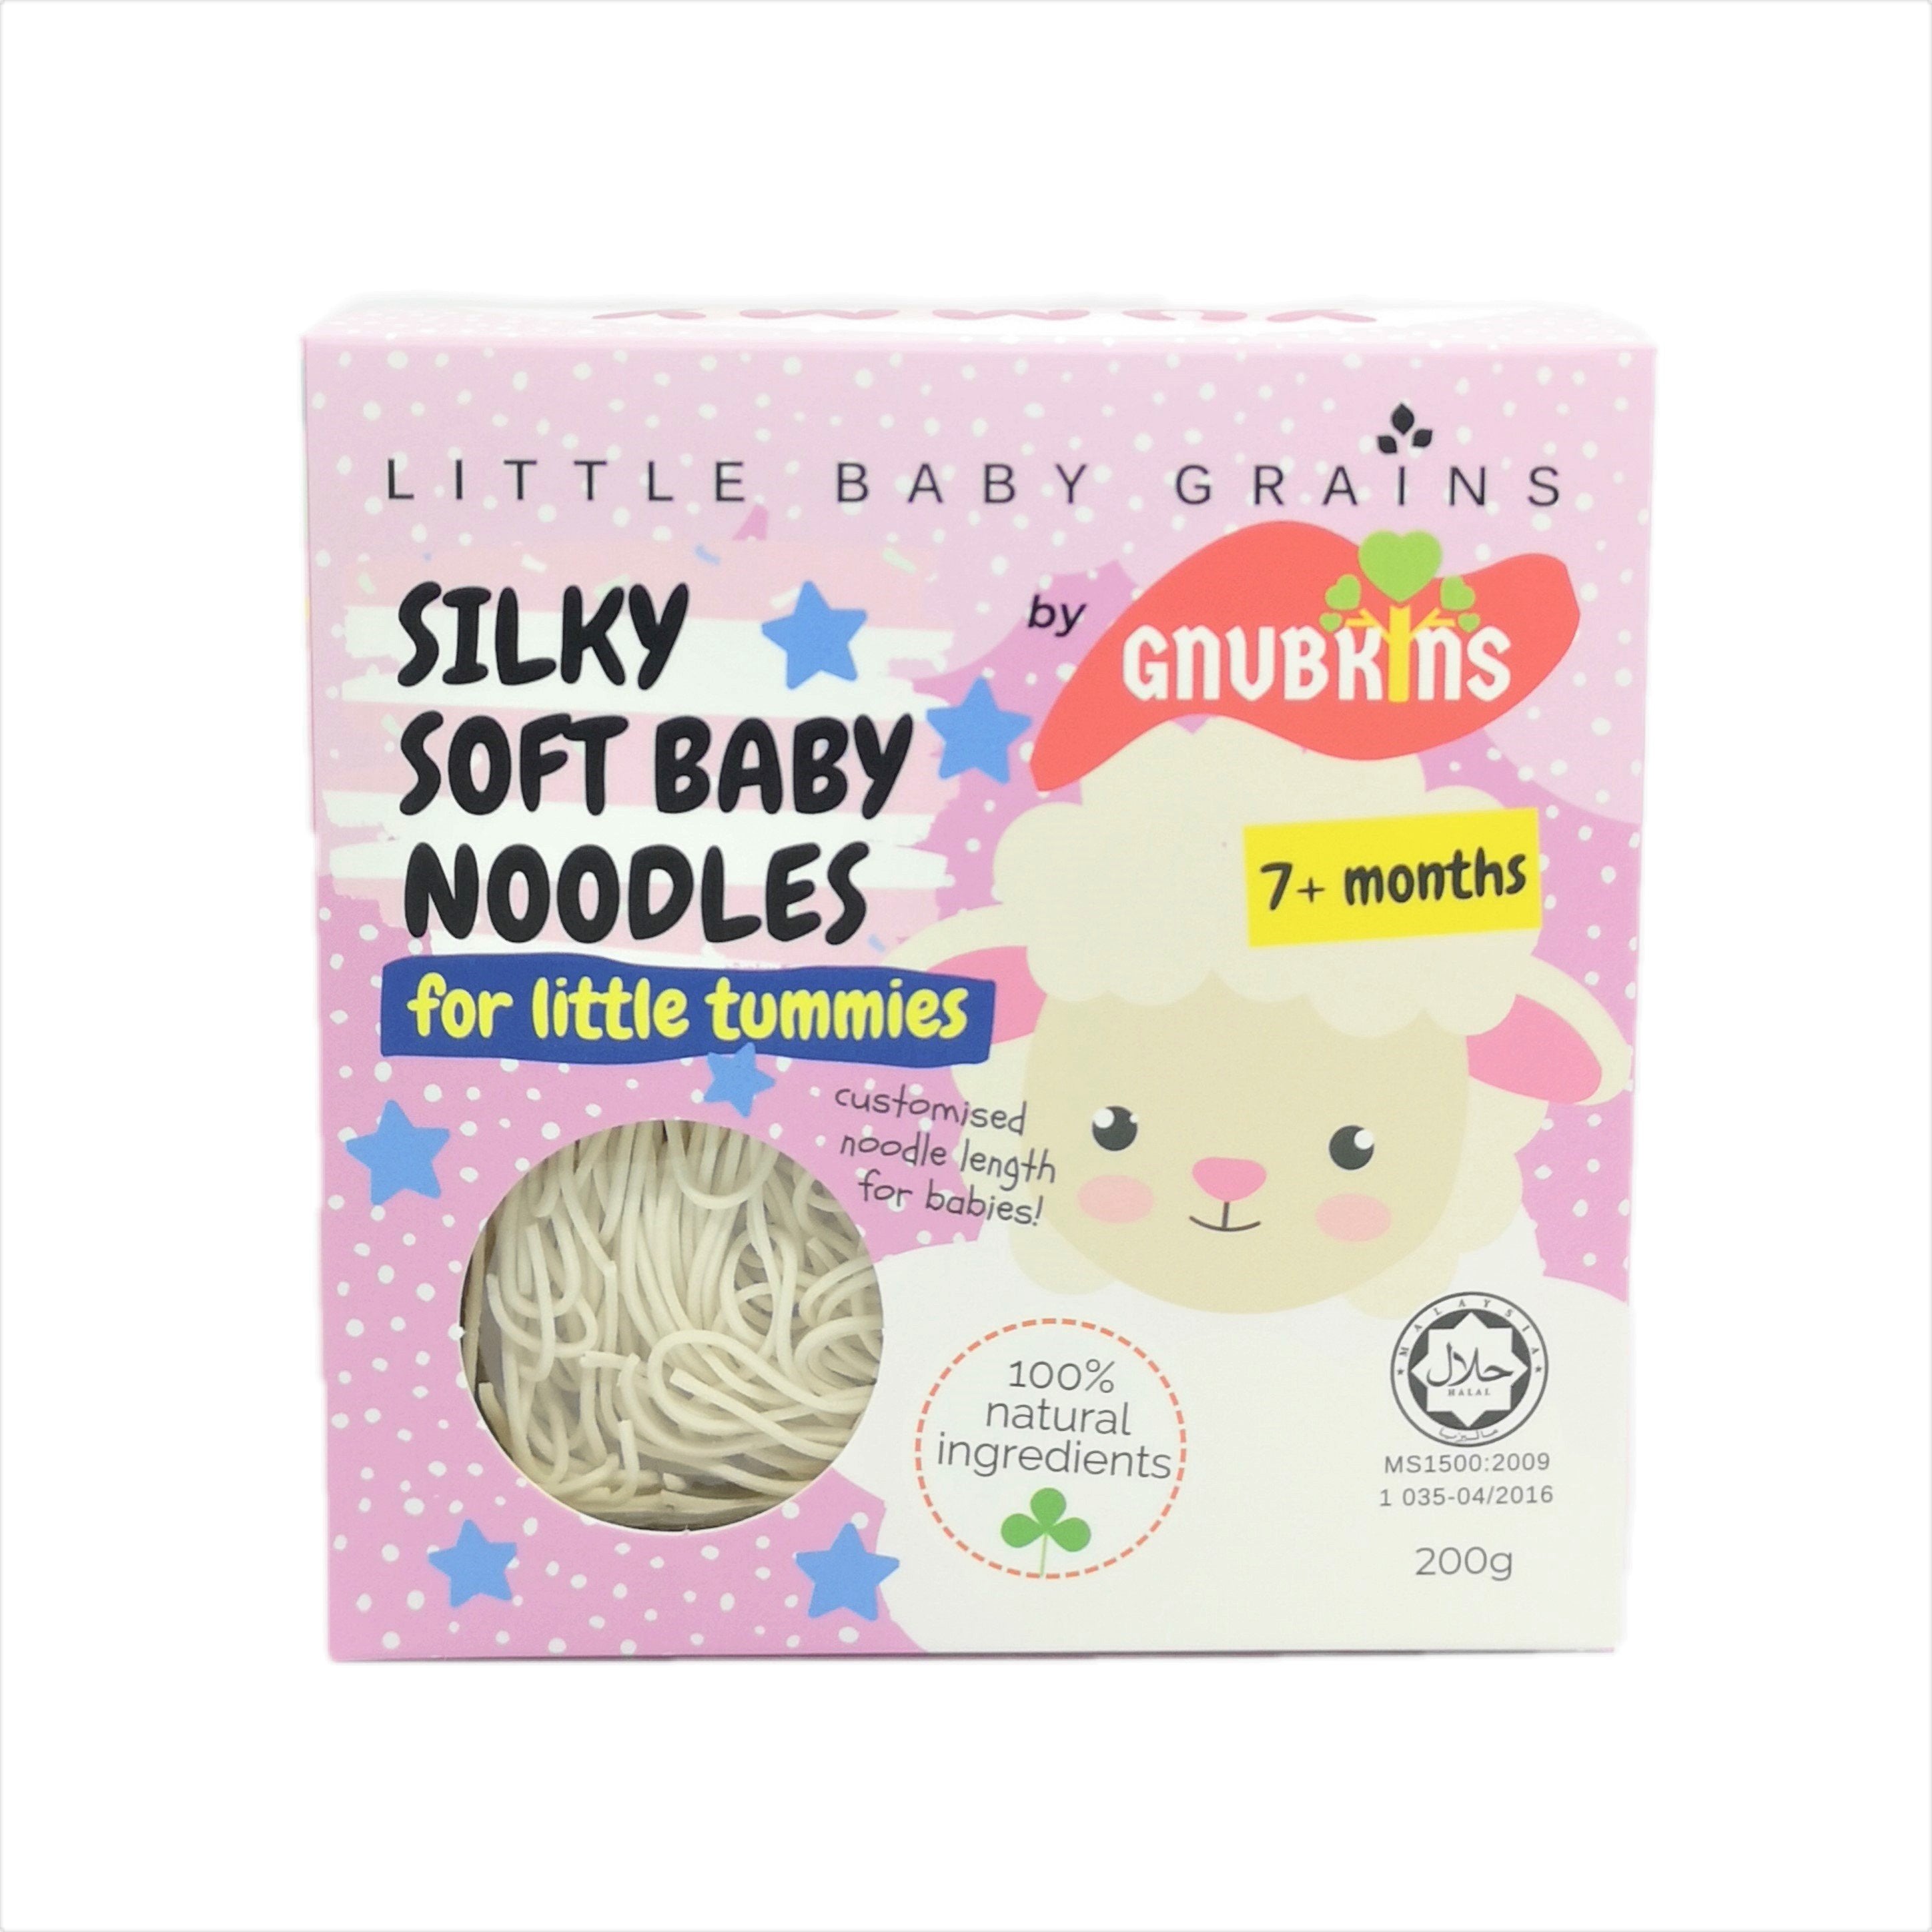 LBG Silky Soft Baby Noodles